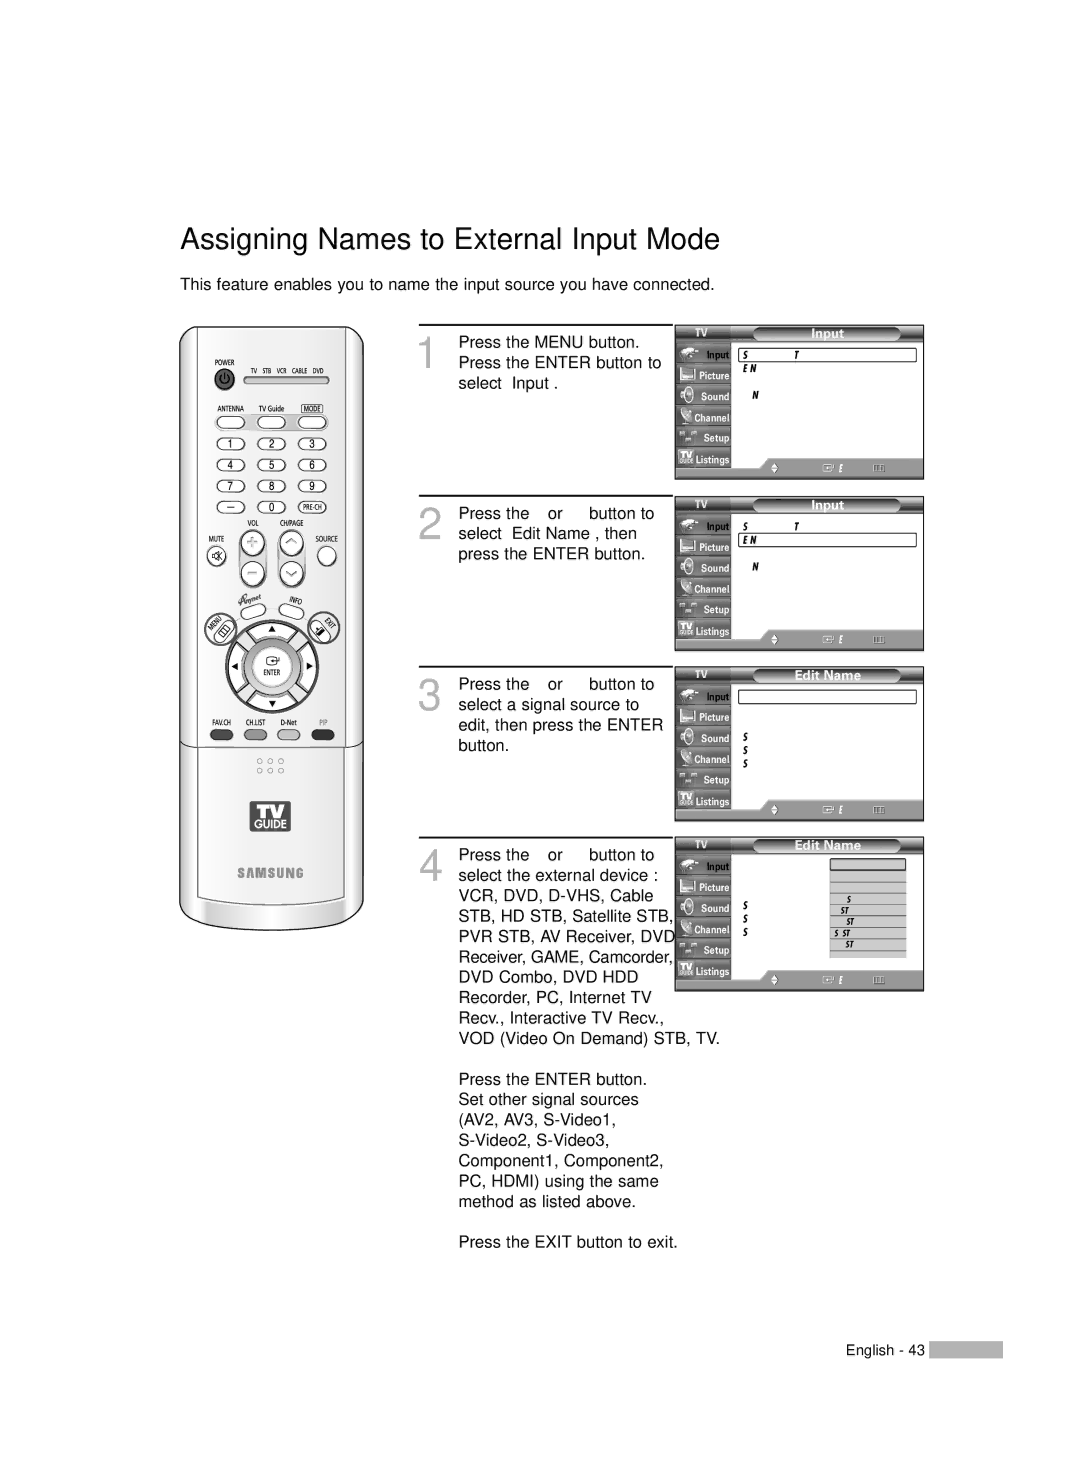 Samsung HL-R5067W, HL-R6167W, HL-R5667W manual Assigning Names to External Input Mode, Edit Name 